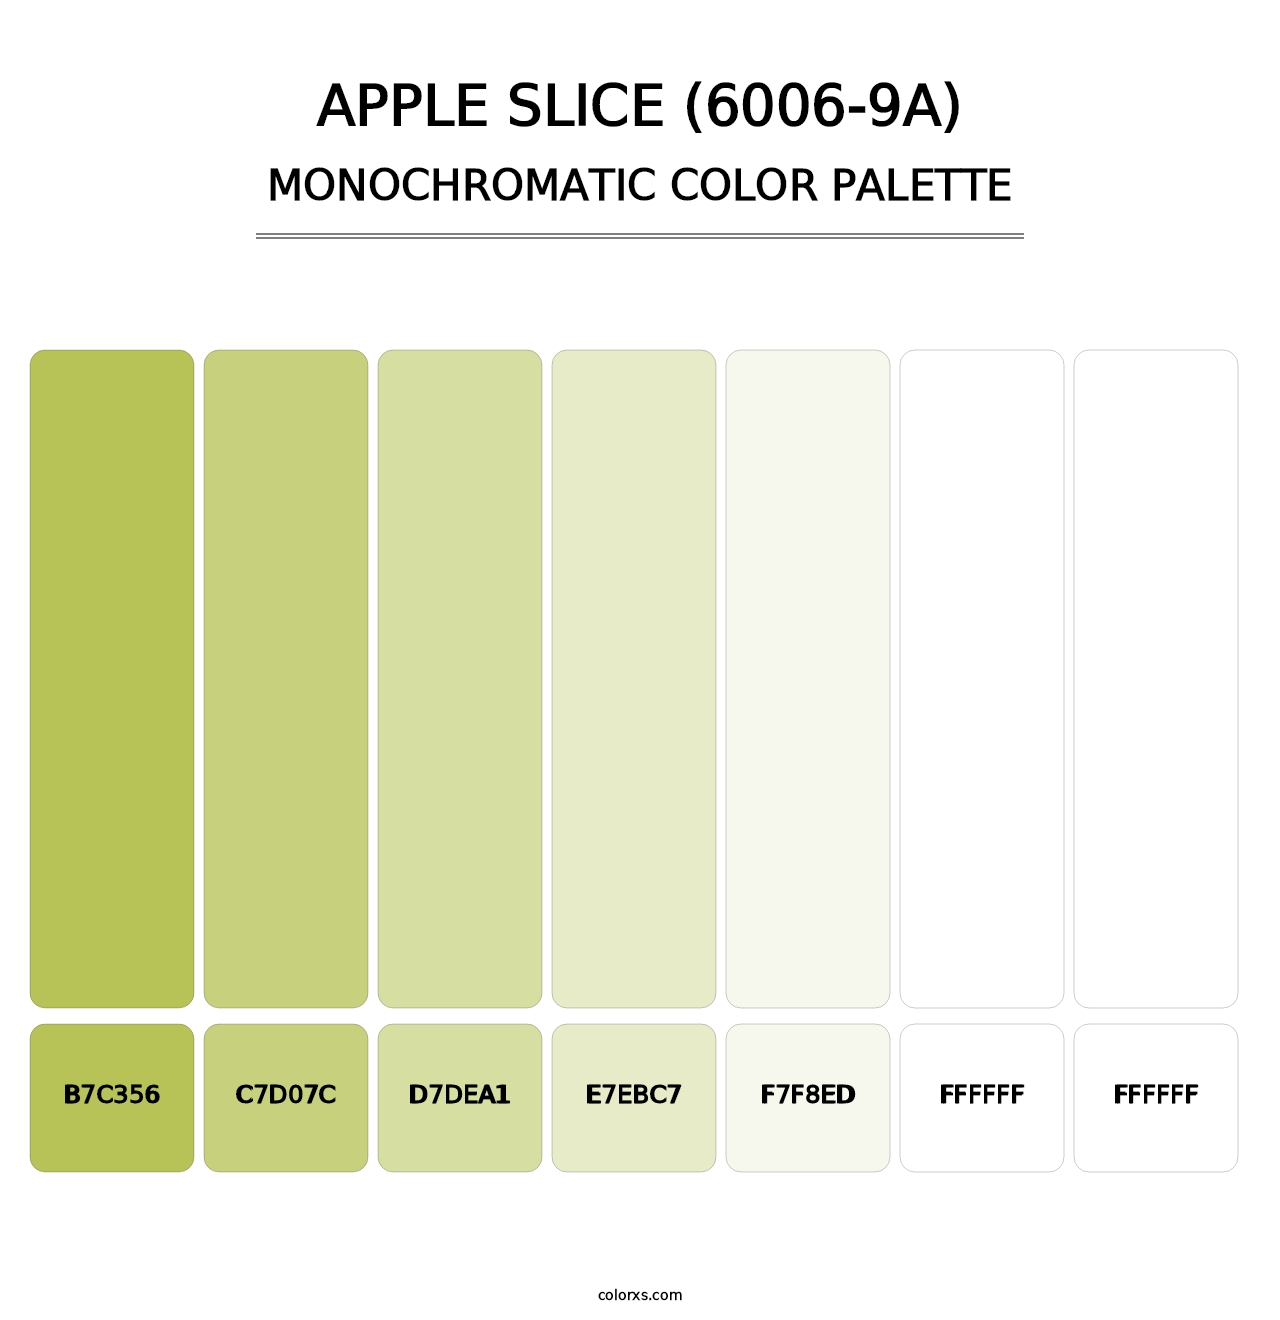 Apple Slice (6006-9A) - Monochromatic Color Palette